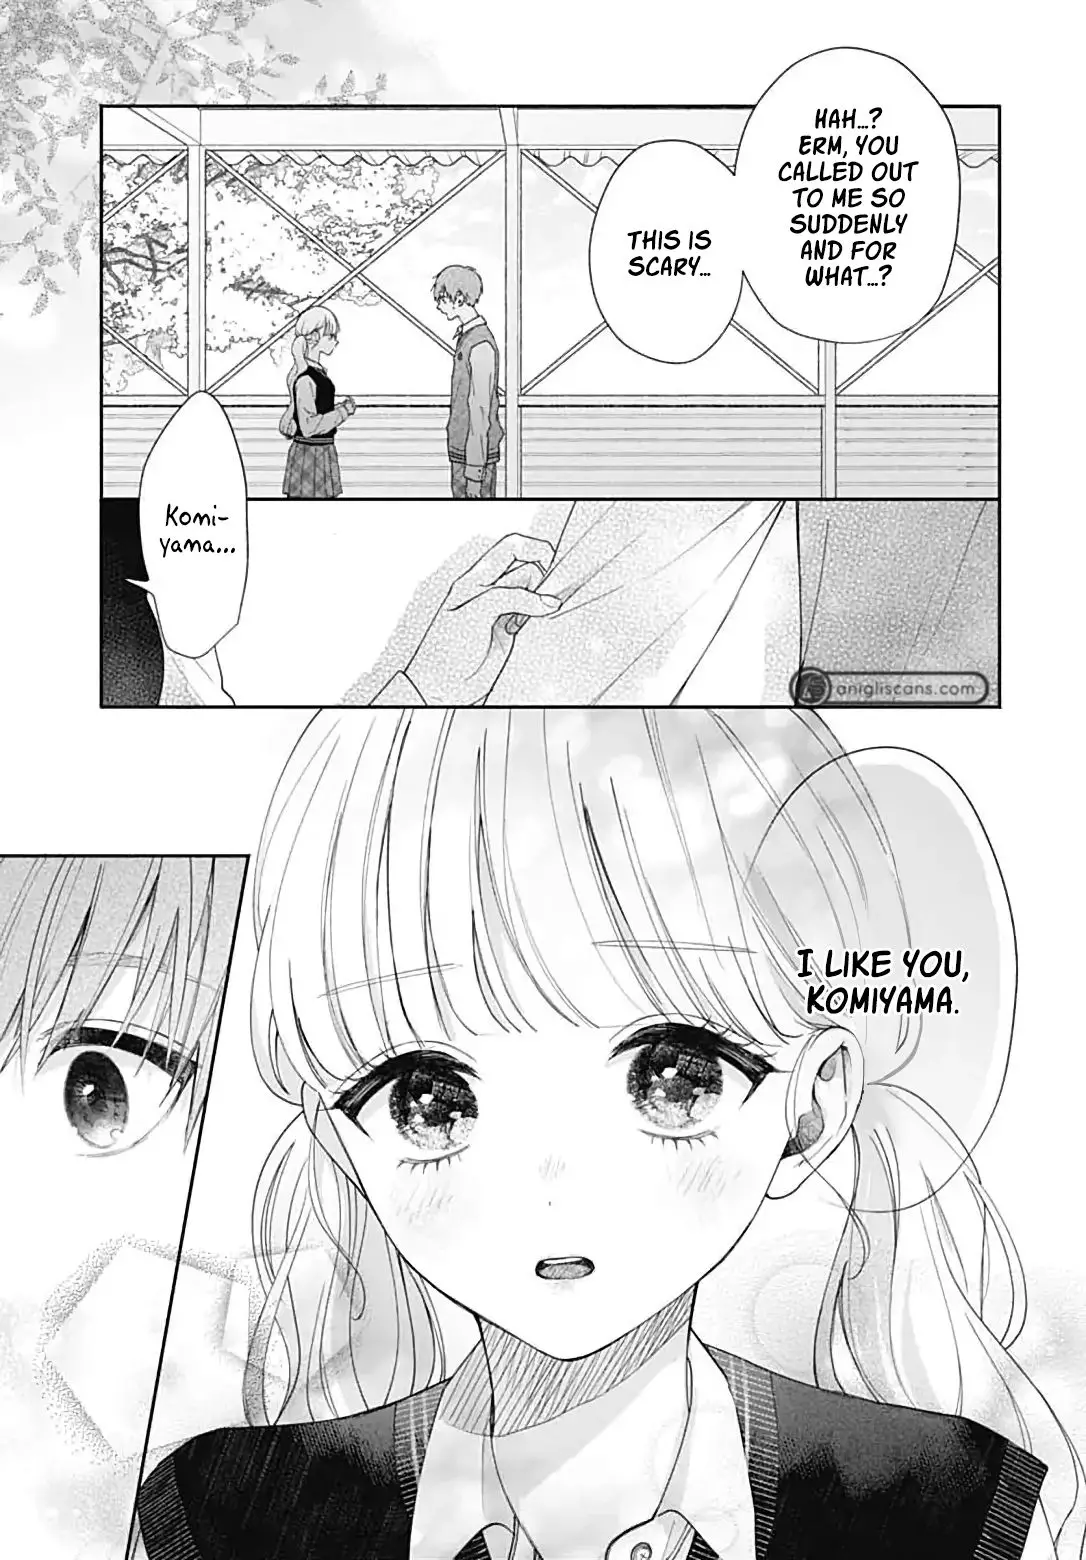 I Hate Komiyama - 2 page 4-5a57f6de